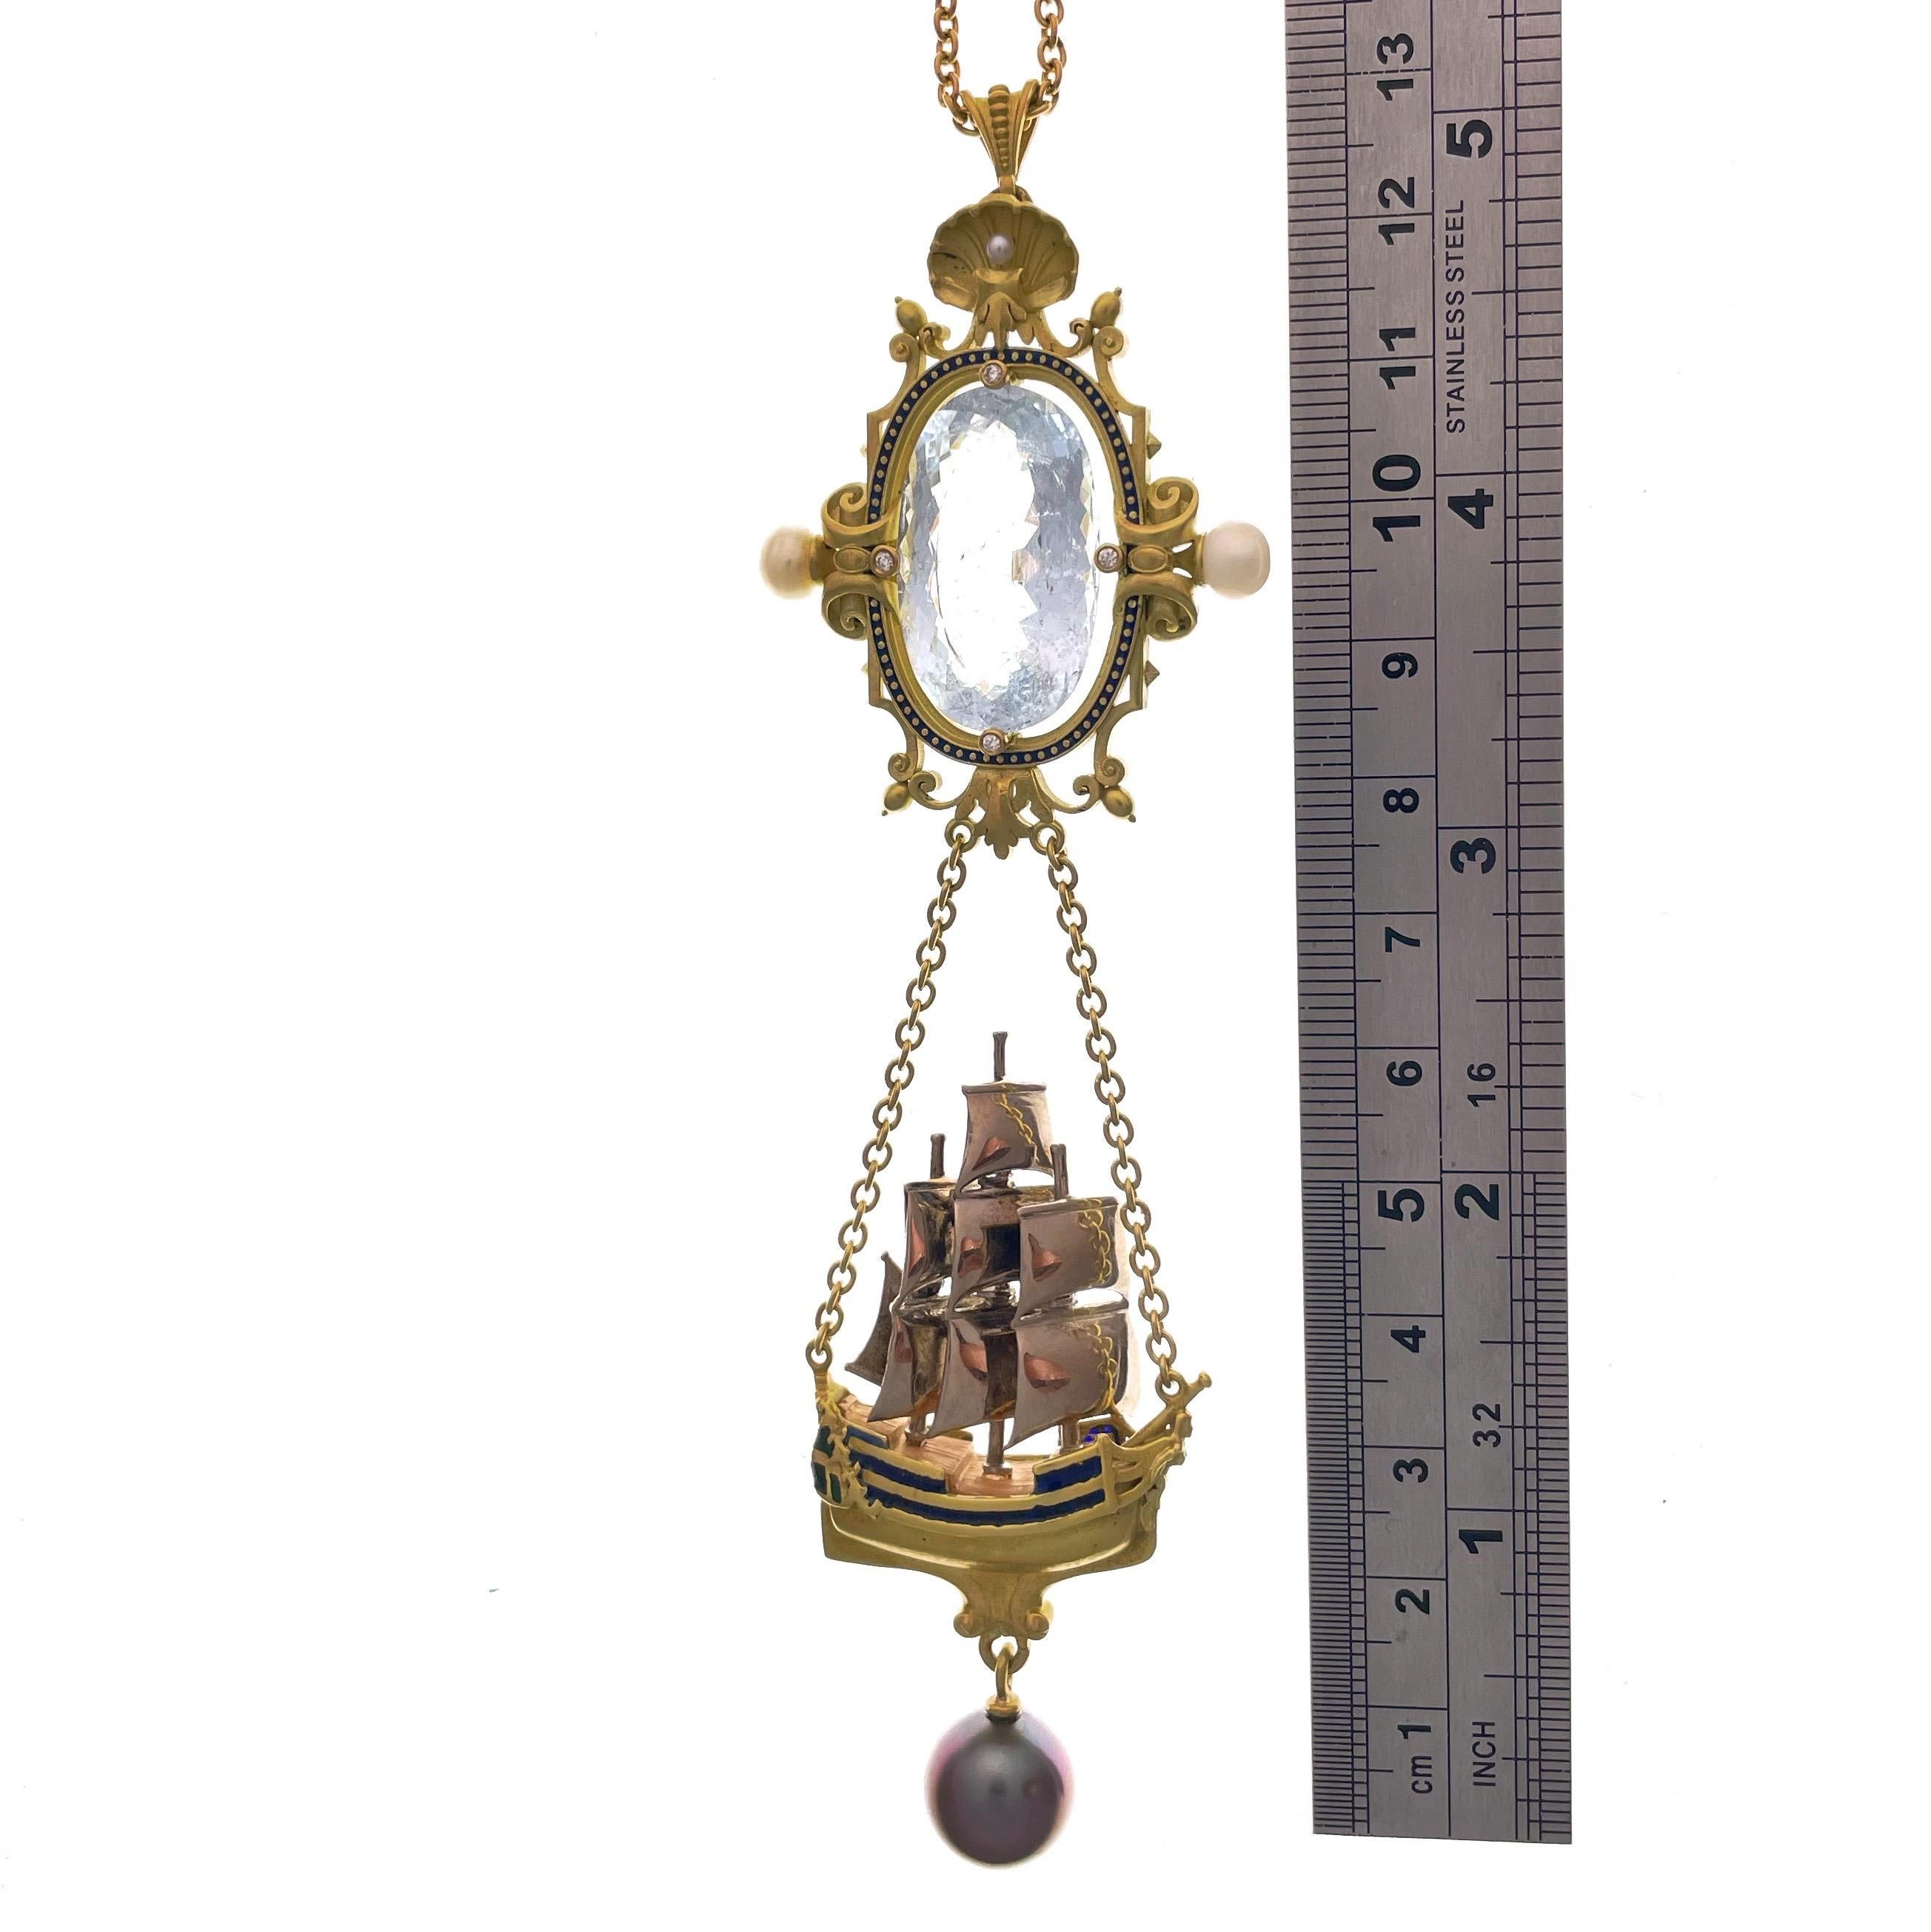 Aquamarine, Diamonds, Pearls, Enamel, 18kt Gold Antique Style Pendant Necklace For Sale 2